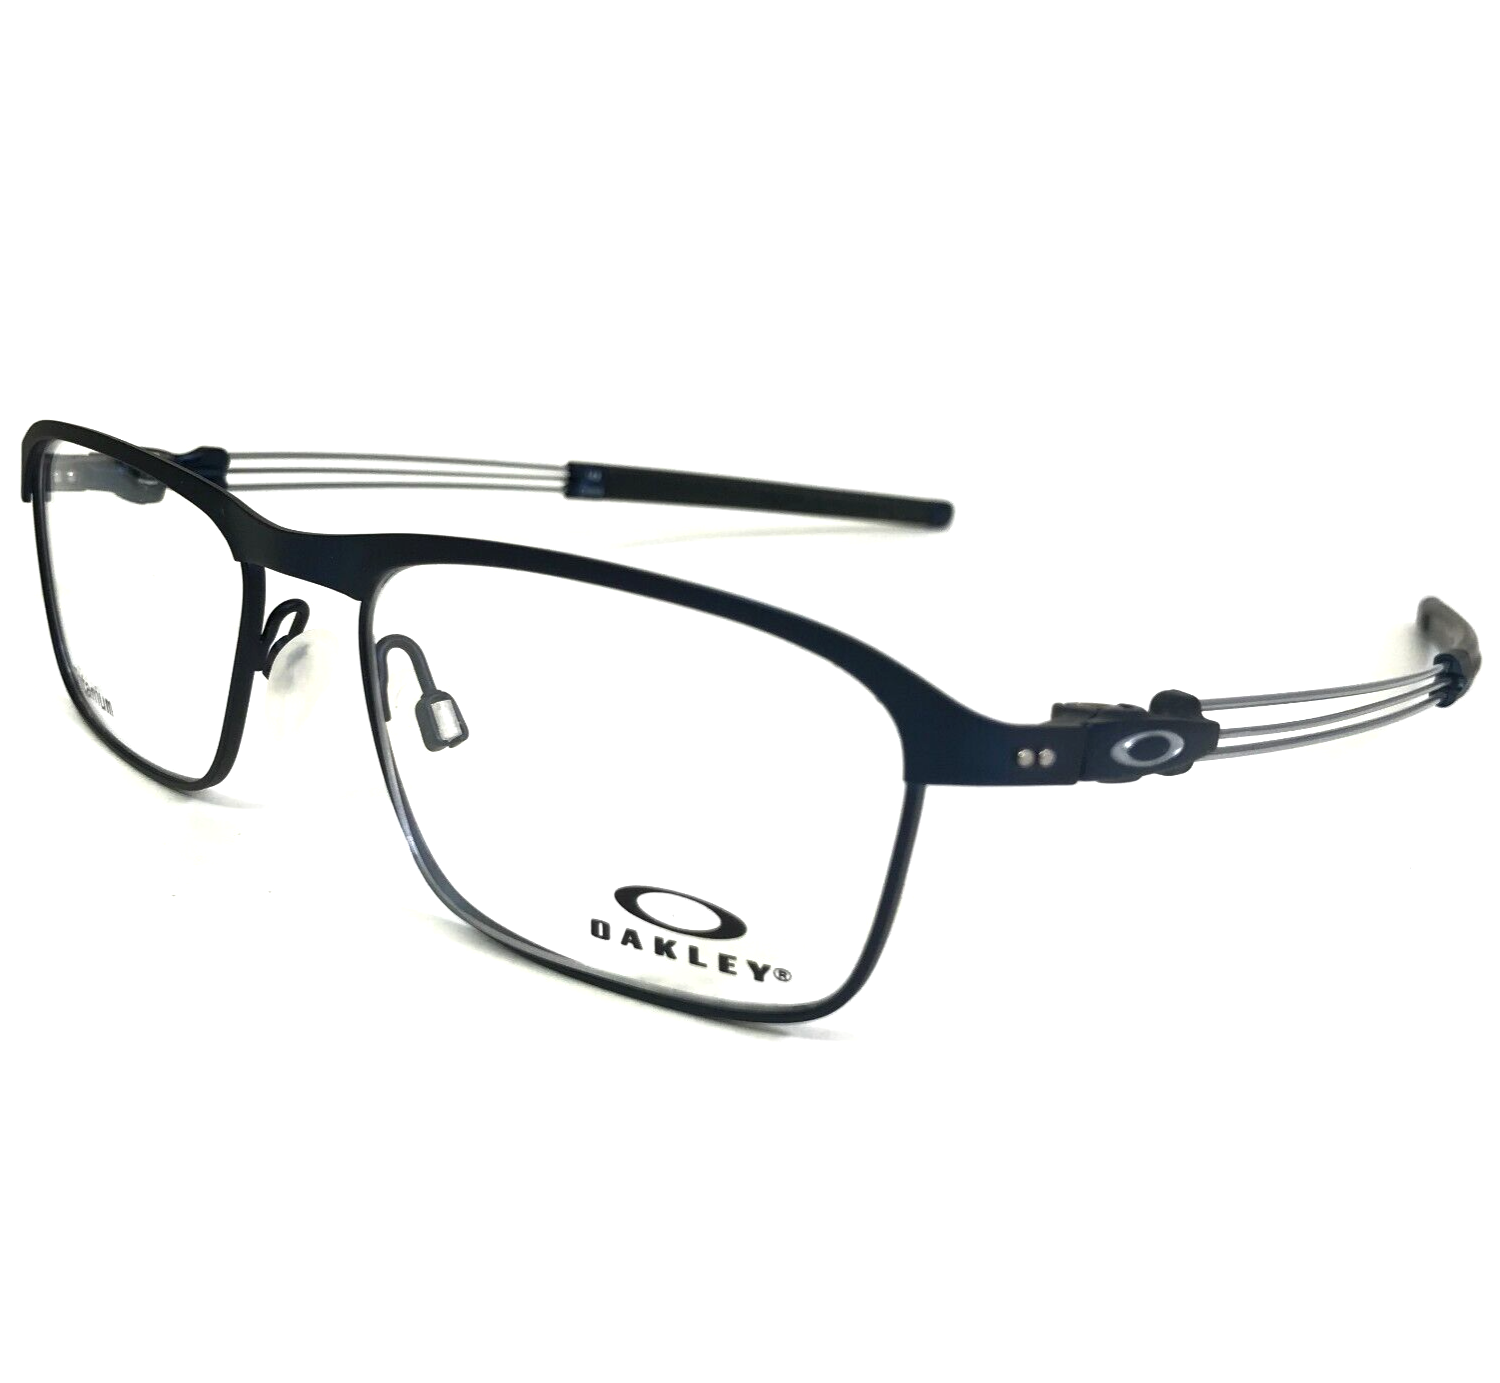 Primary image for Oakley Eyeglasses Frames OX5124-0353 Matte Blue Silver Square Full Rim 53-17-143